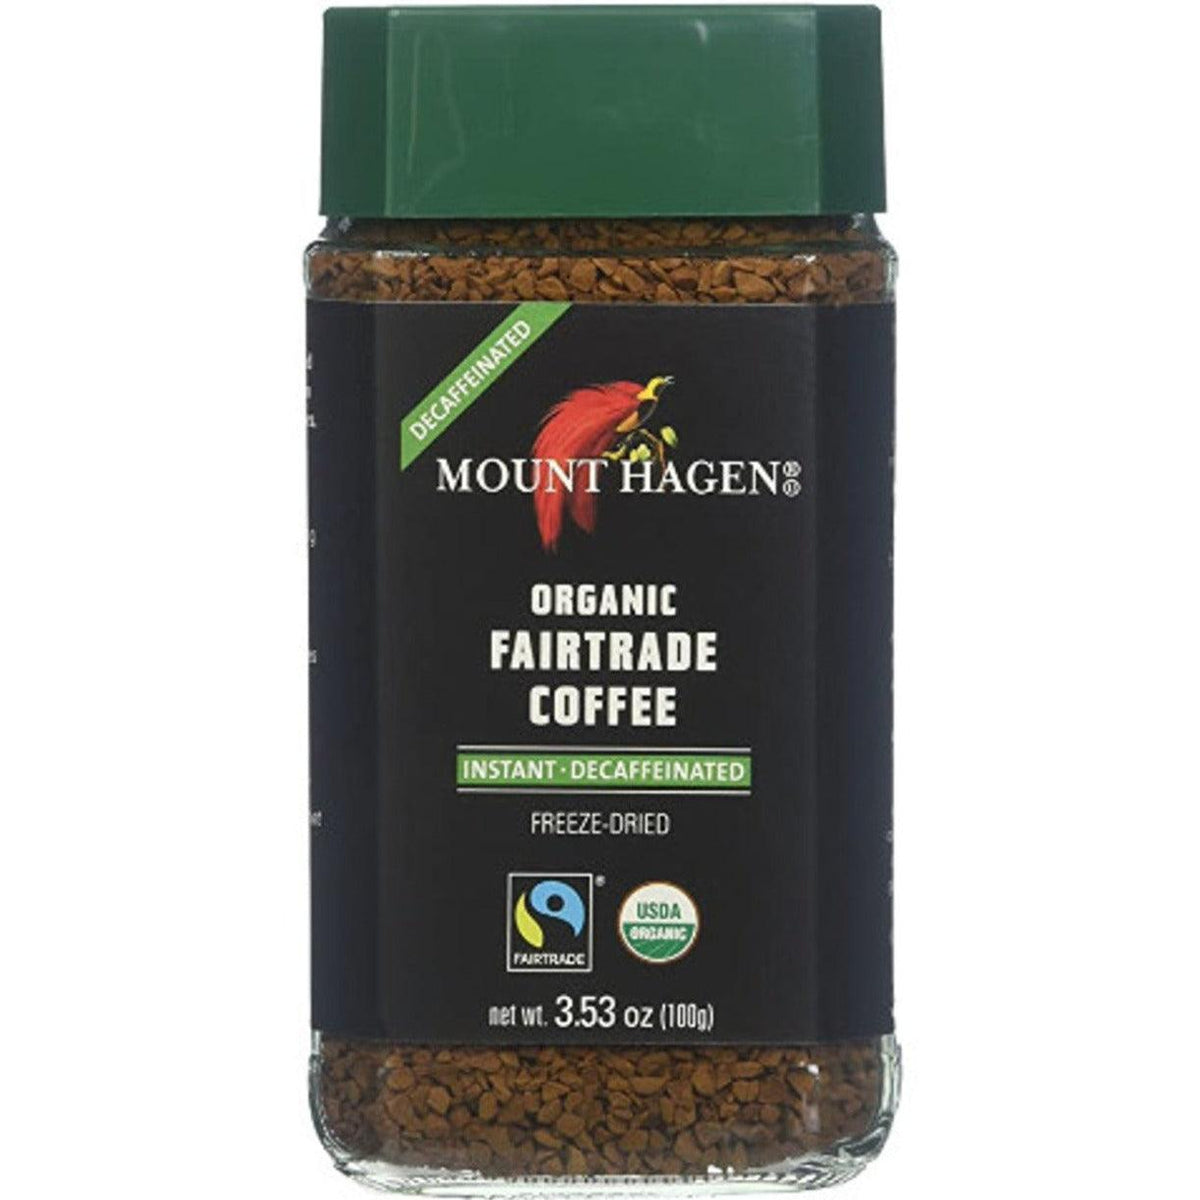 Mount Hagen Organic Fairtrade Decaffeinated Instant Coffee 100g Food Items at Village Vitamin Store